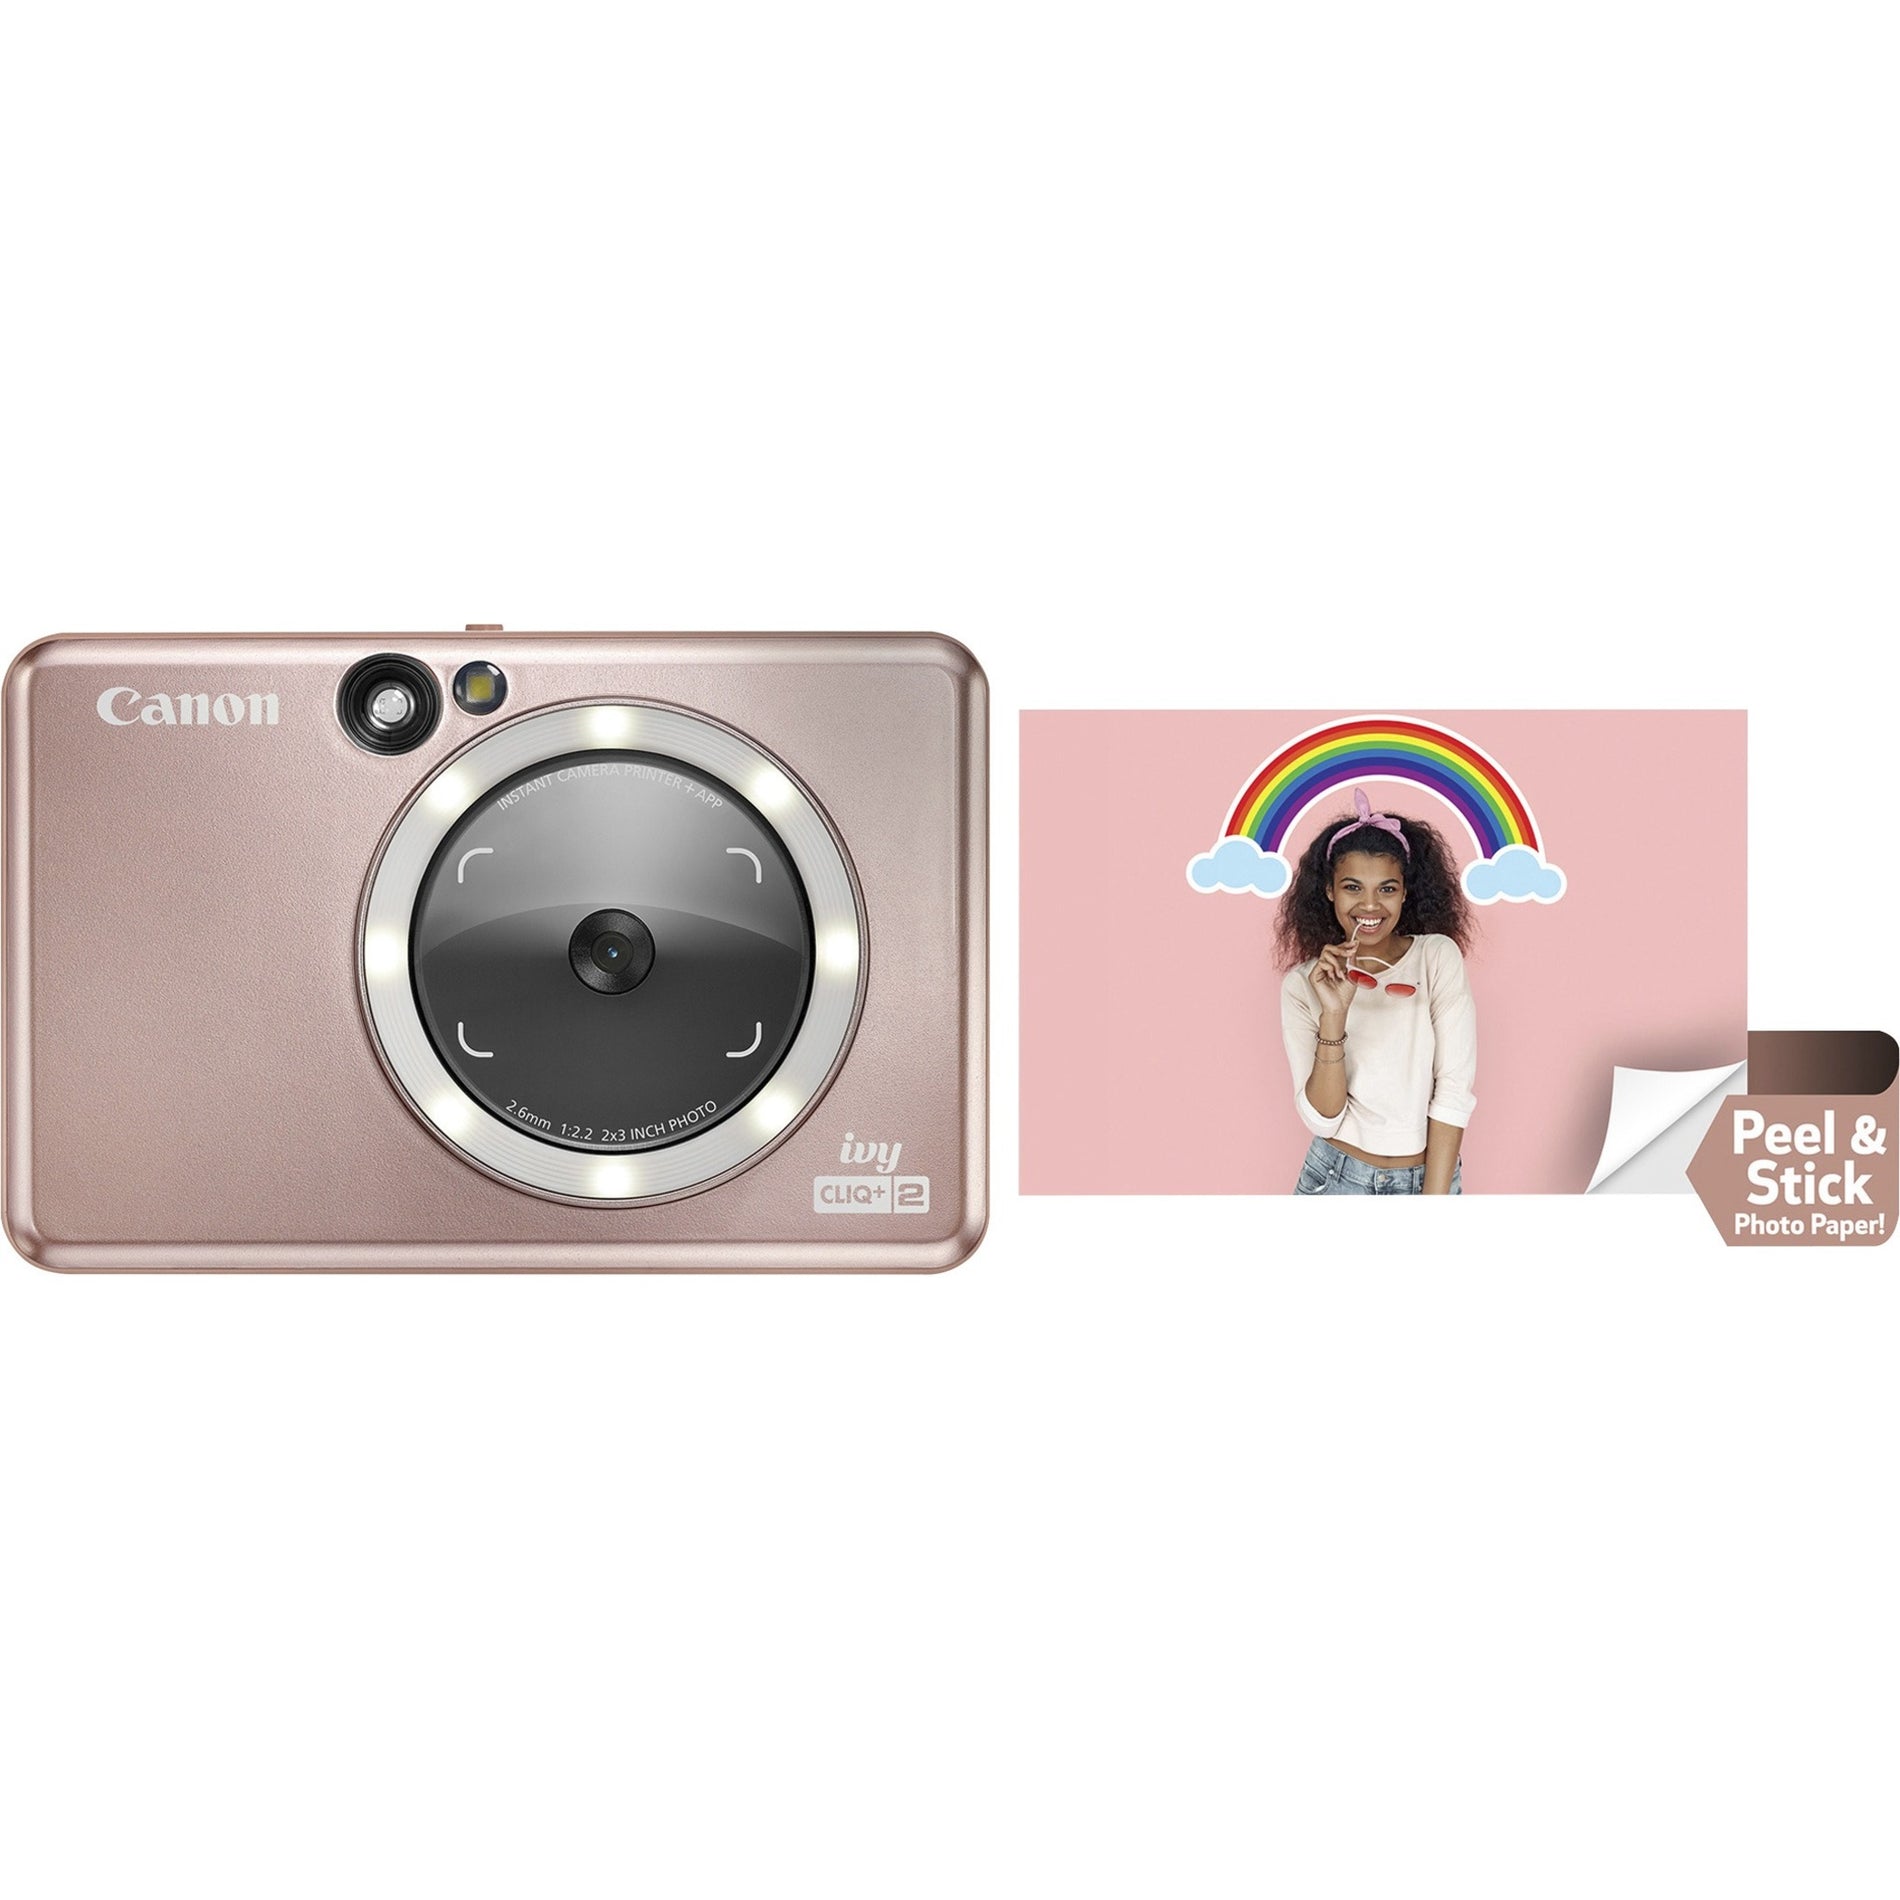 Canon 4519C001 IVY CLIQ+2 Instant Camera Printer + App, Rose Gold